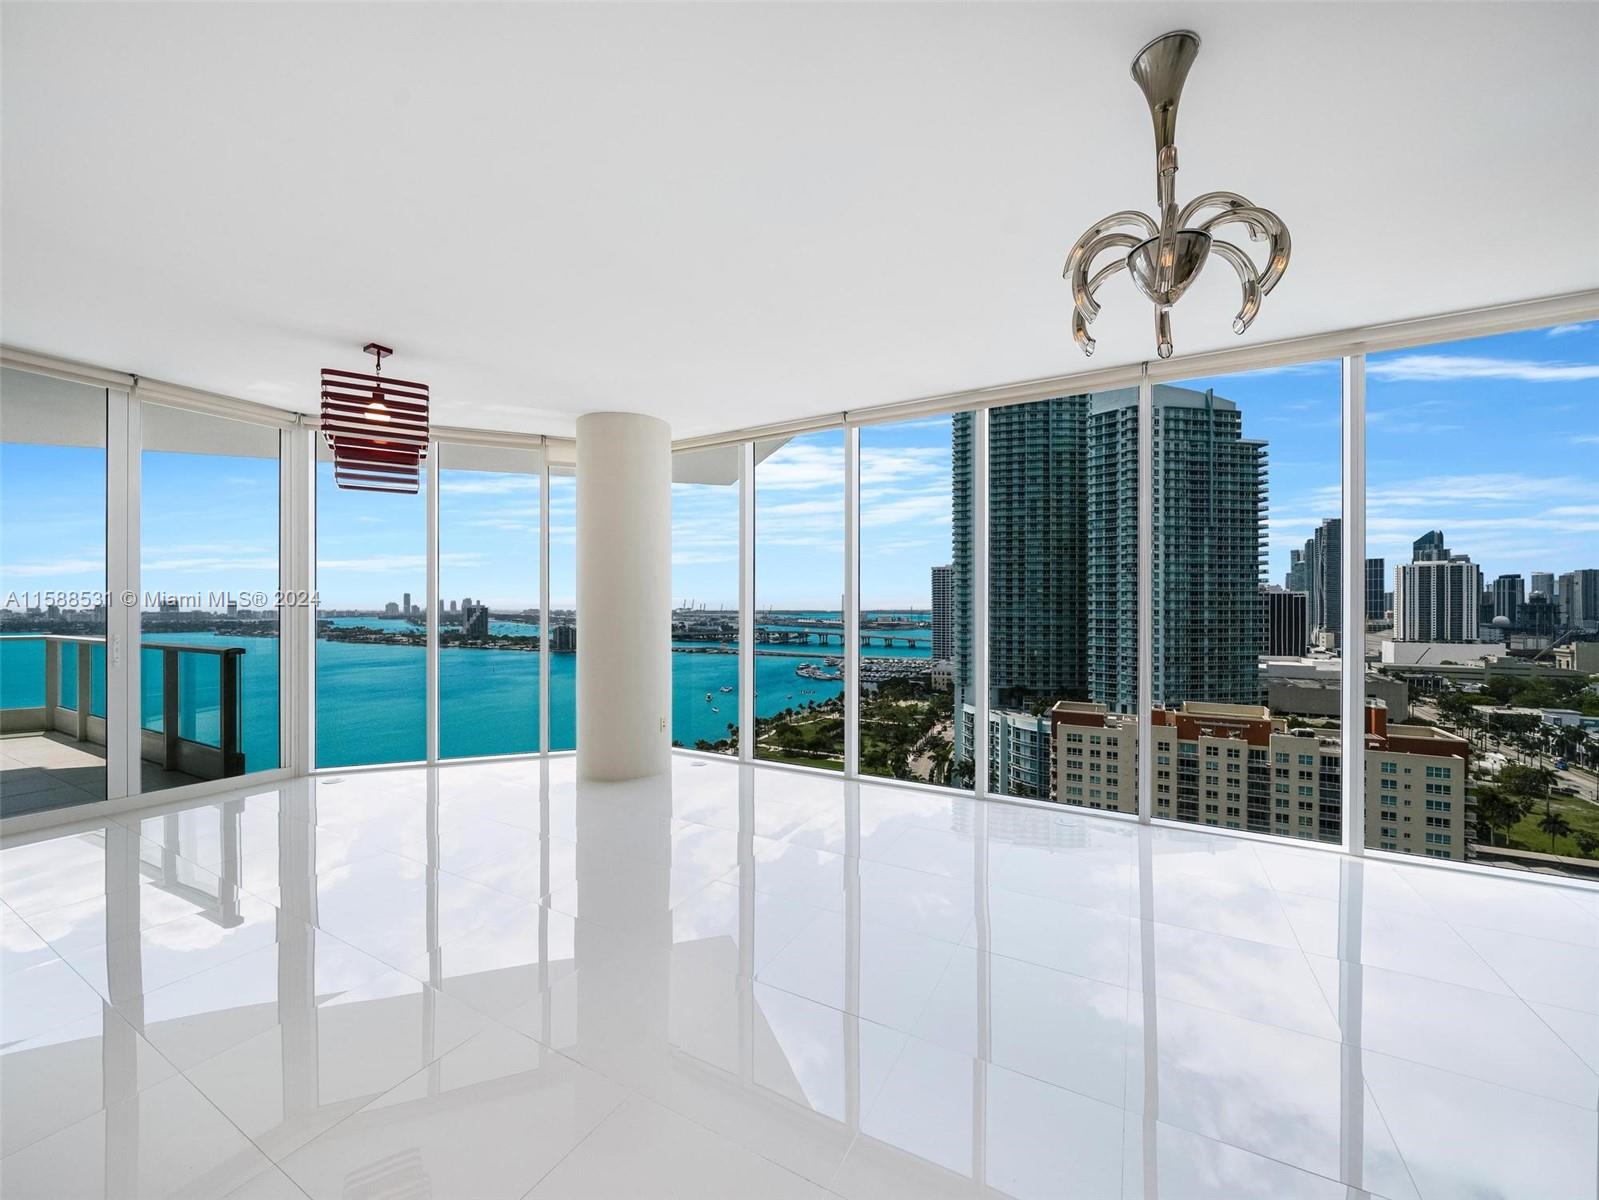 Property for Sale at 2020 N Bayshore Dr 2402, Miami, Broward County, Florida - Bedrooms: 3 
Bathrooms: 4  - $2,300,000